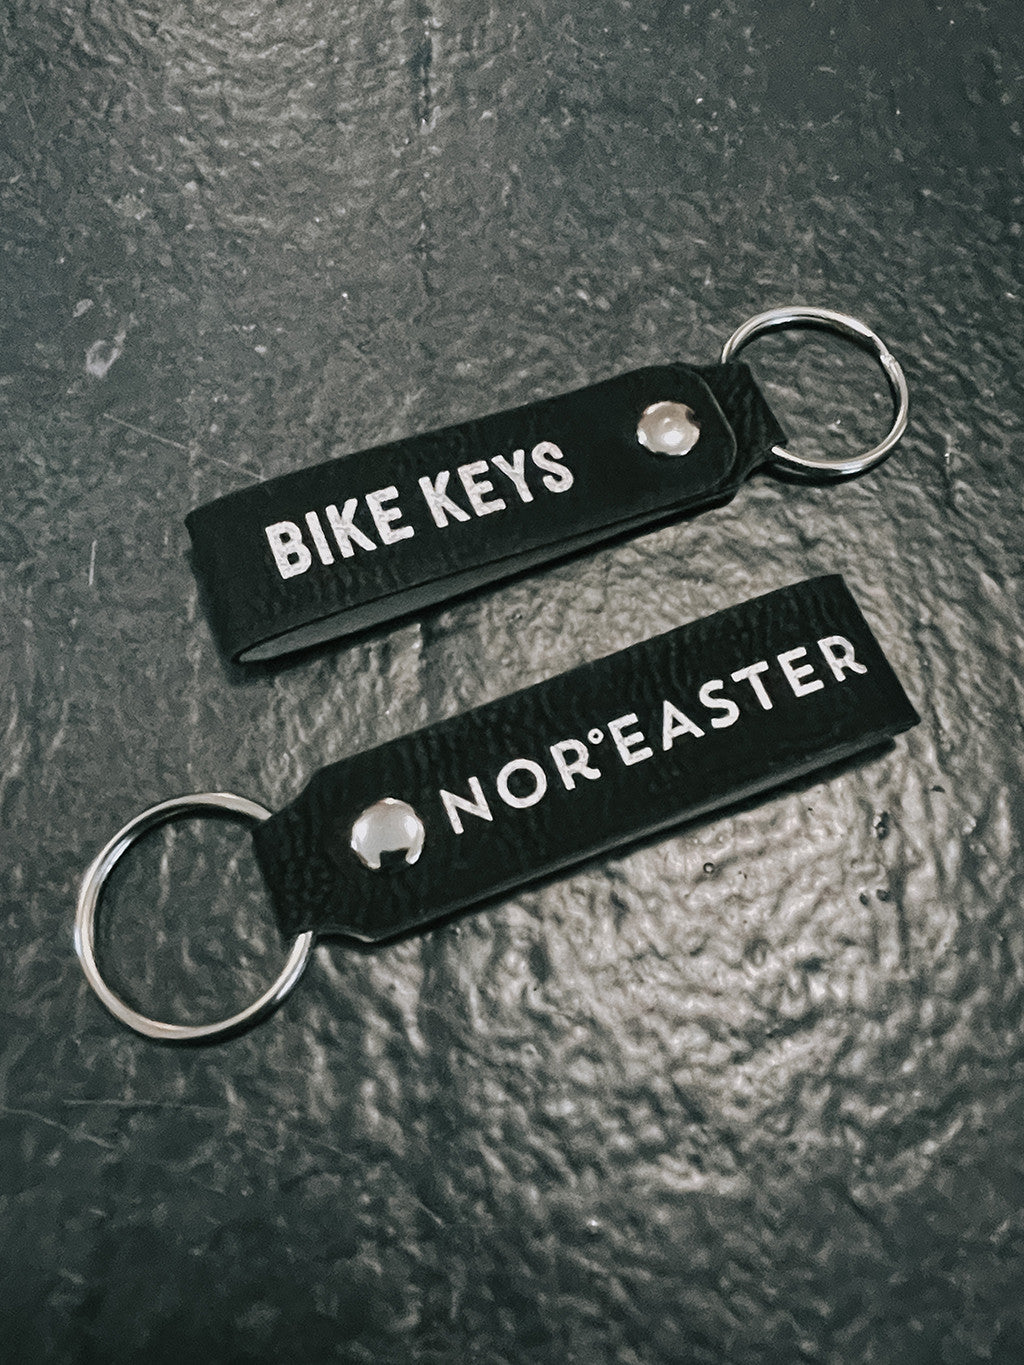 Nor'easter Boat Bike & Wheeler Keychains